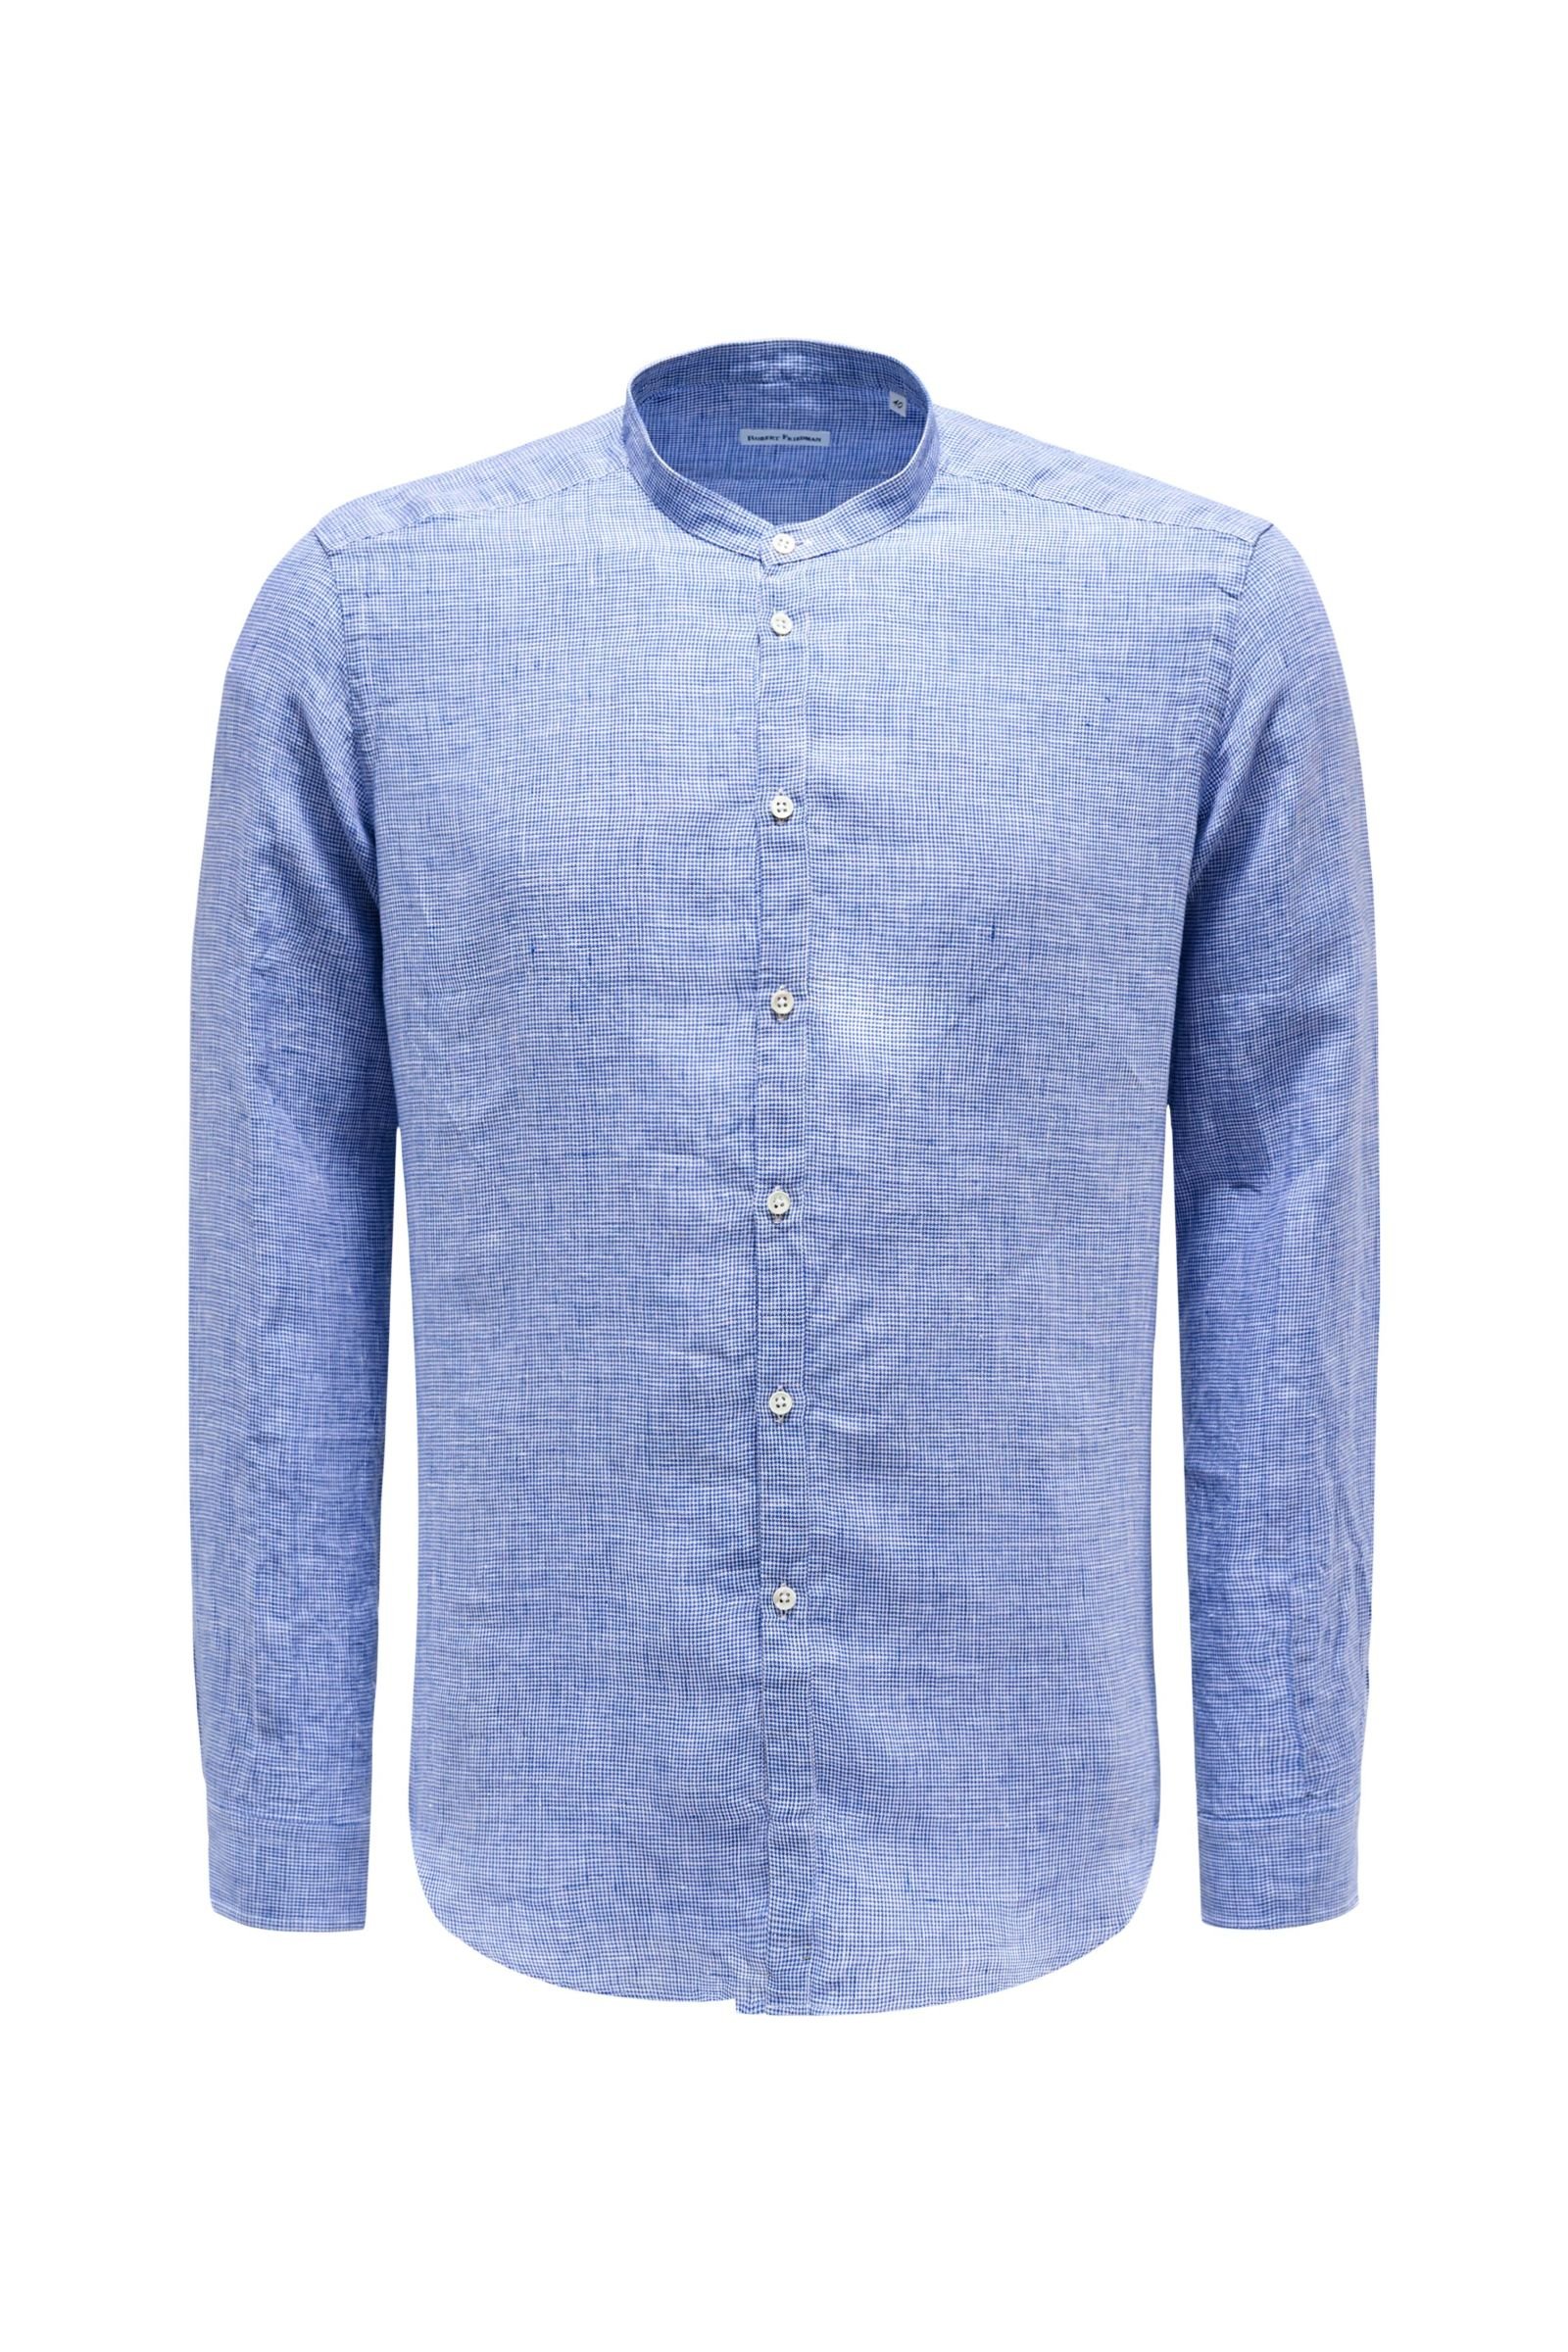 Linen shirt 'Tokio' grandad collar blue/white checked